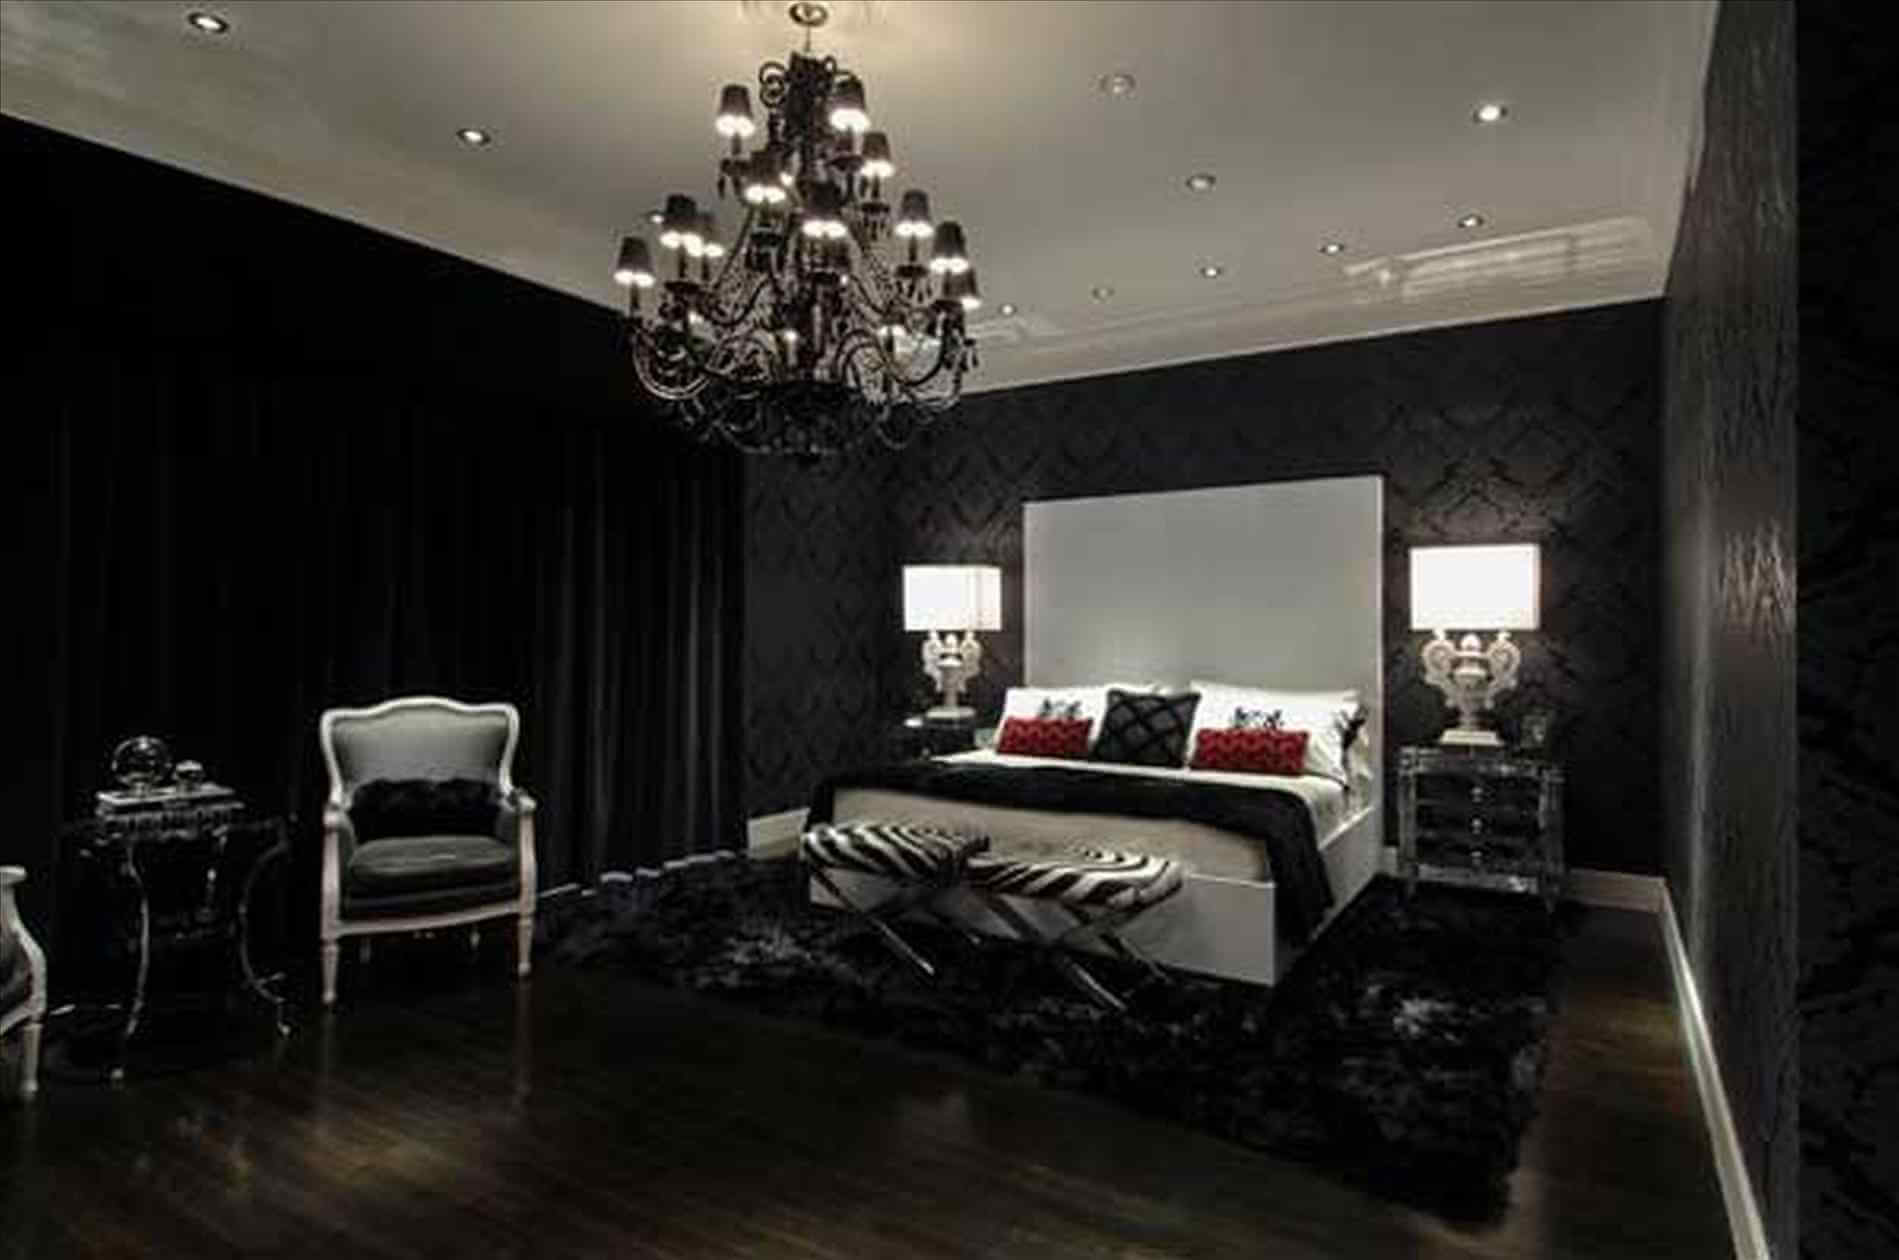 Graceful Gothic bedroom